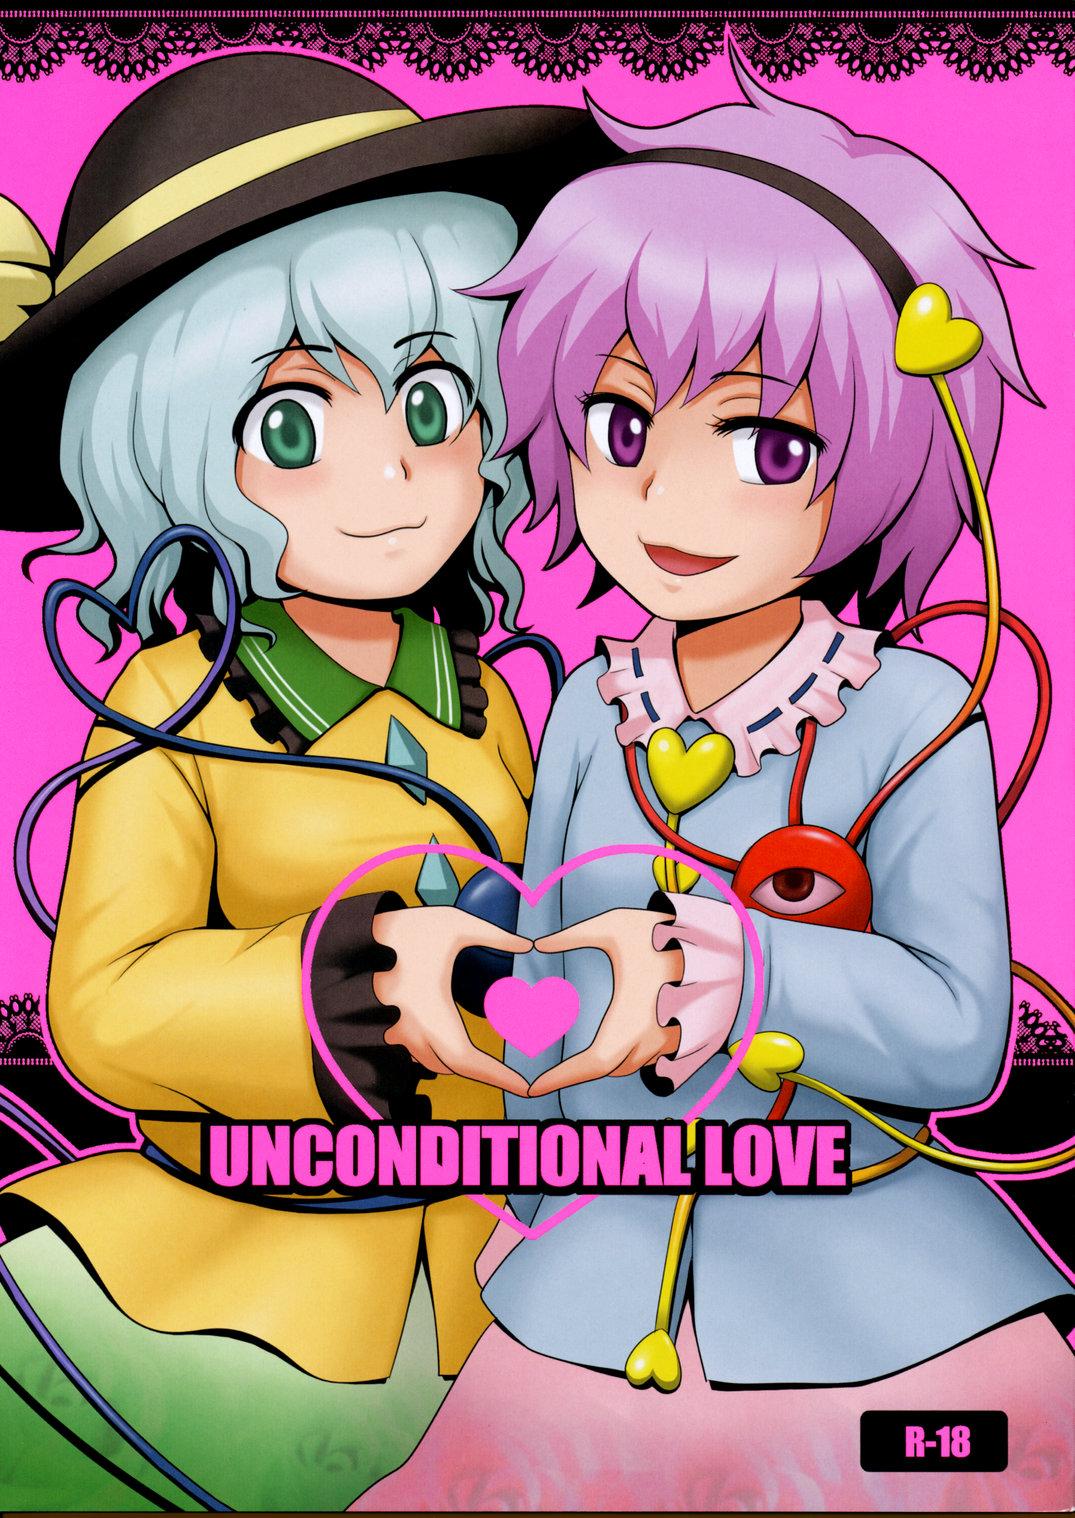 UNCONDITIONAL LOVE 0